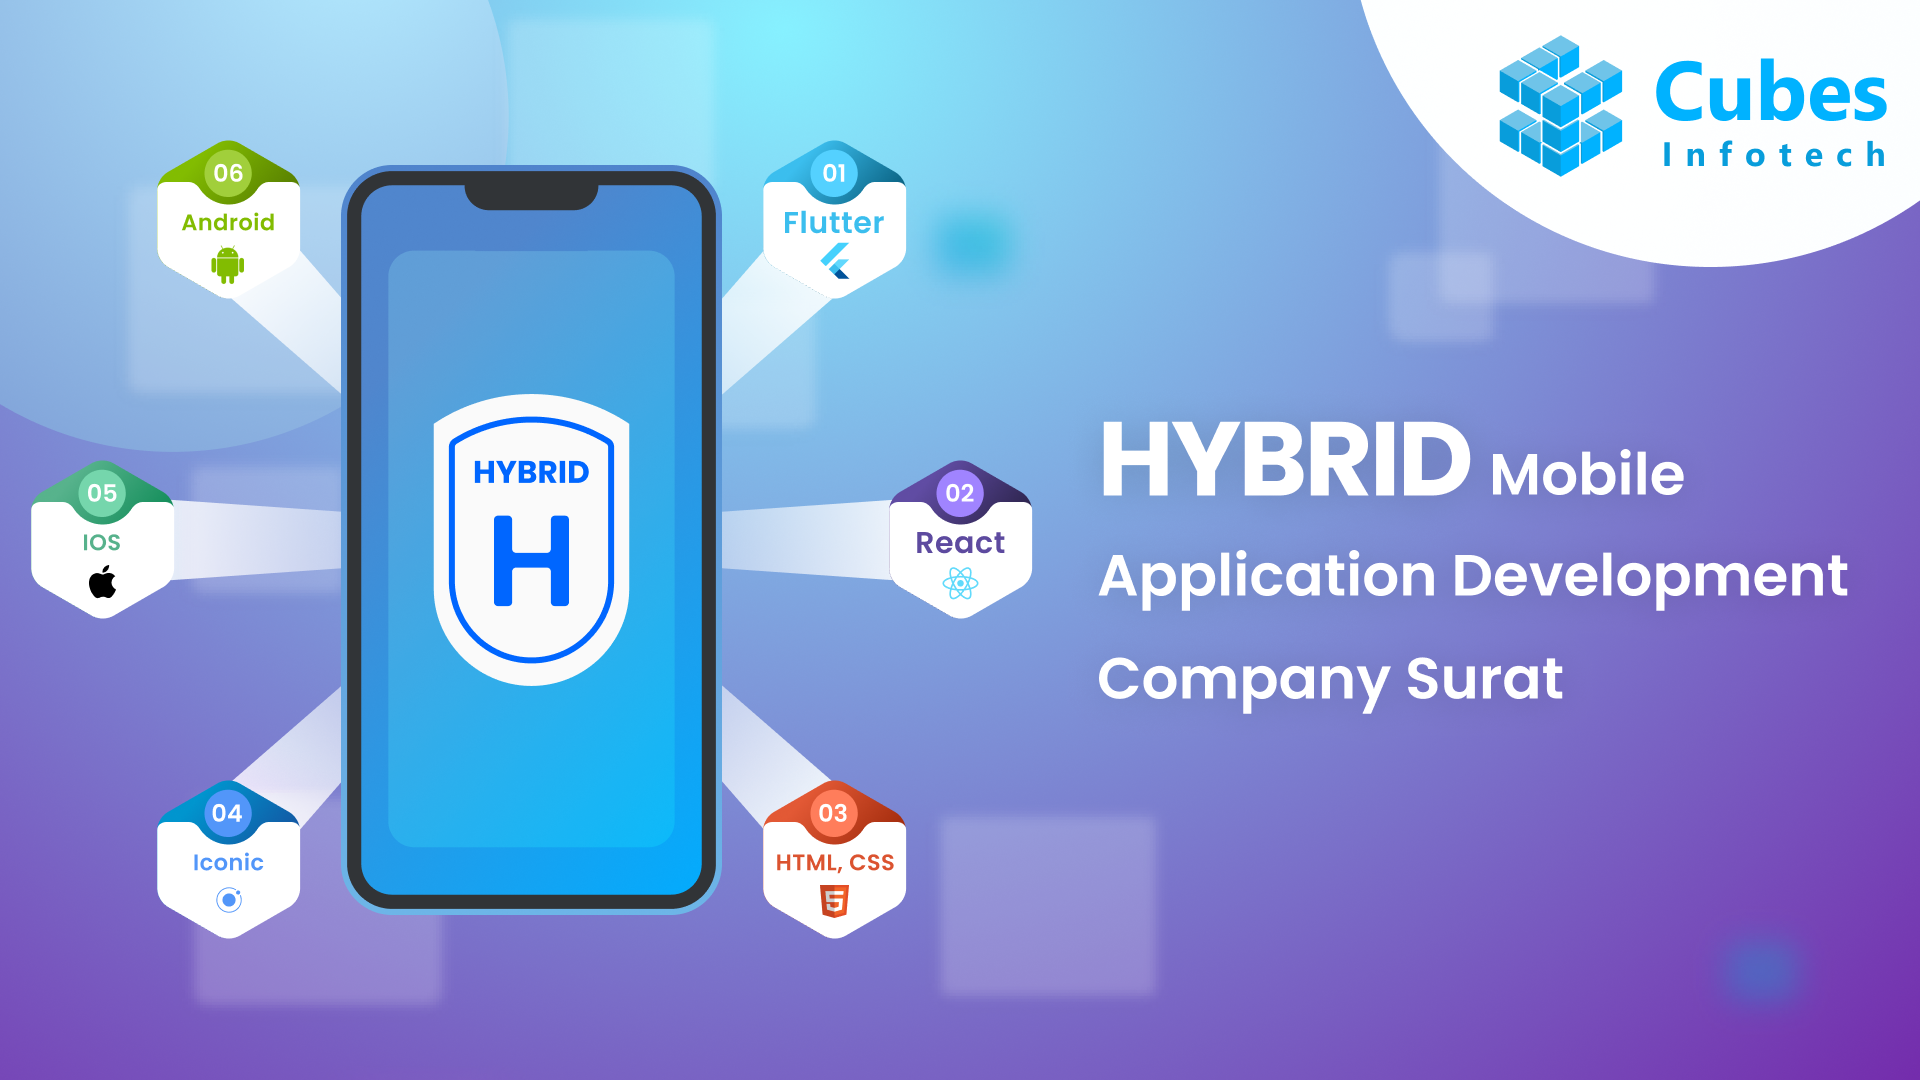 Hybrid Mobile Application Development Company Surat